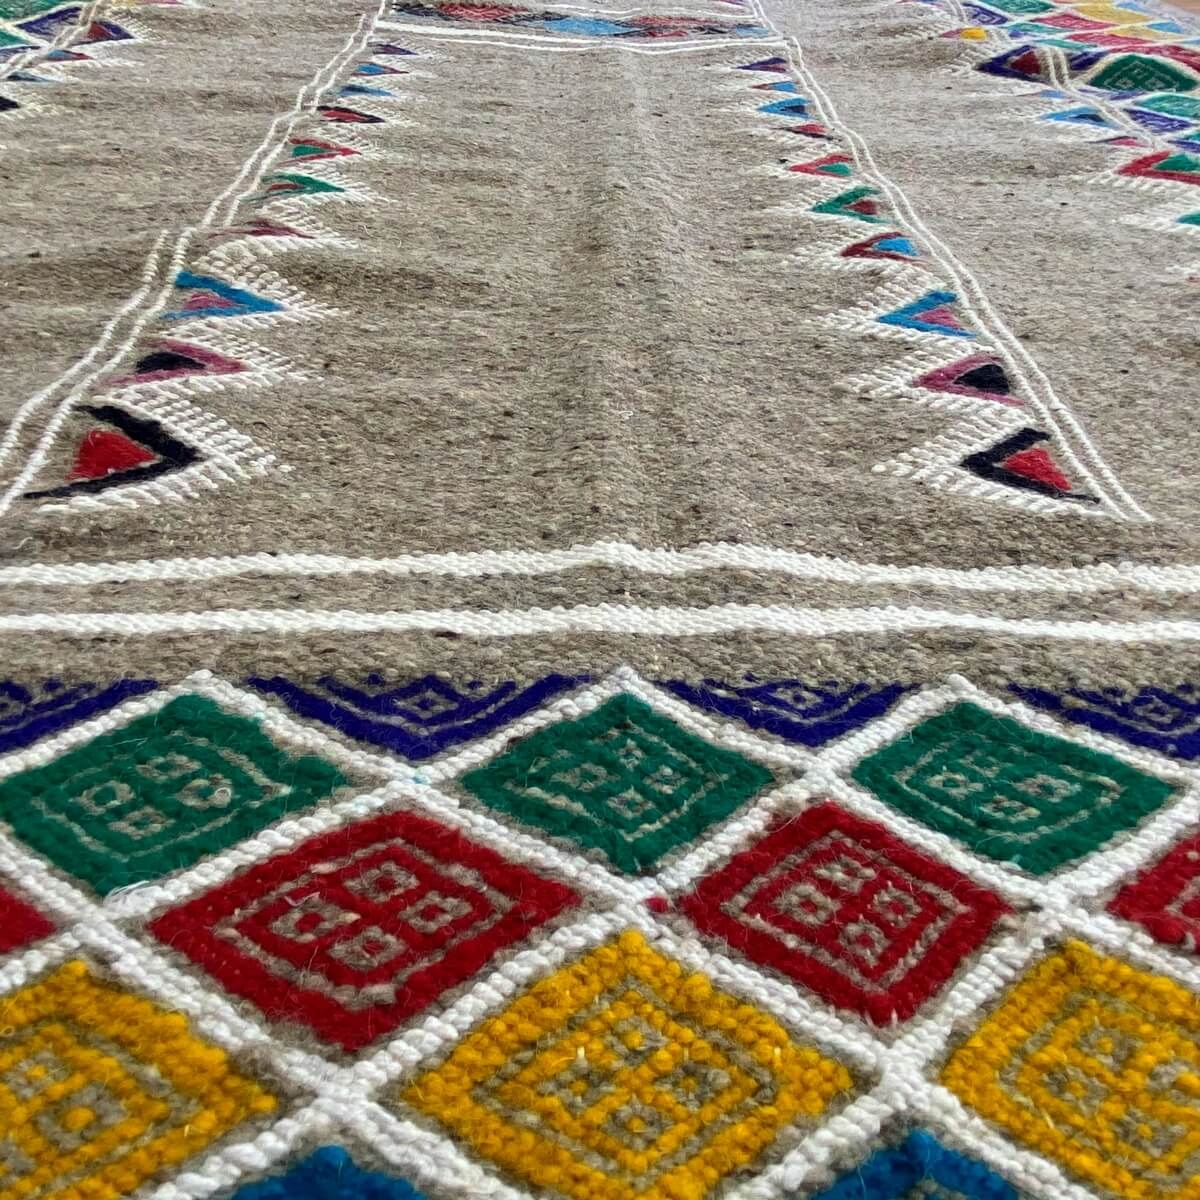 Berber tapijt Tapijt Kilim Gayaya 132x250 Grijs (Handgeweven, Wol, Tunesië) Tunesisch kilimdeken, Marokkaanse stijl. Rechthoekig